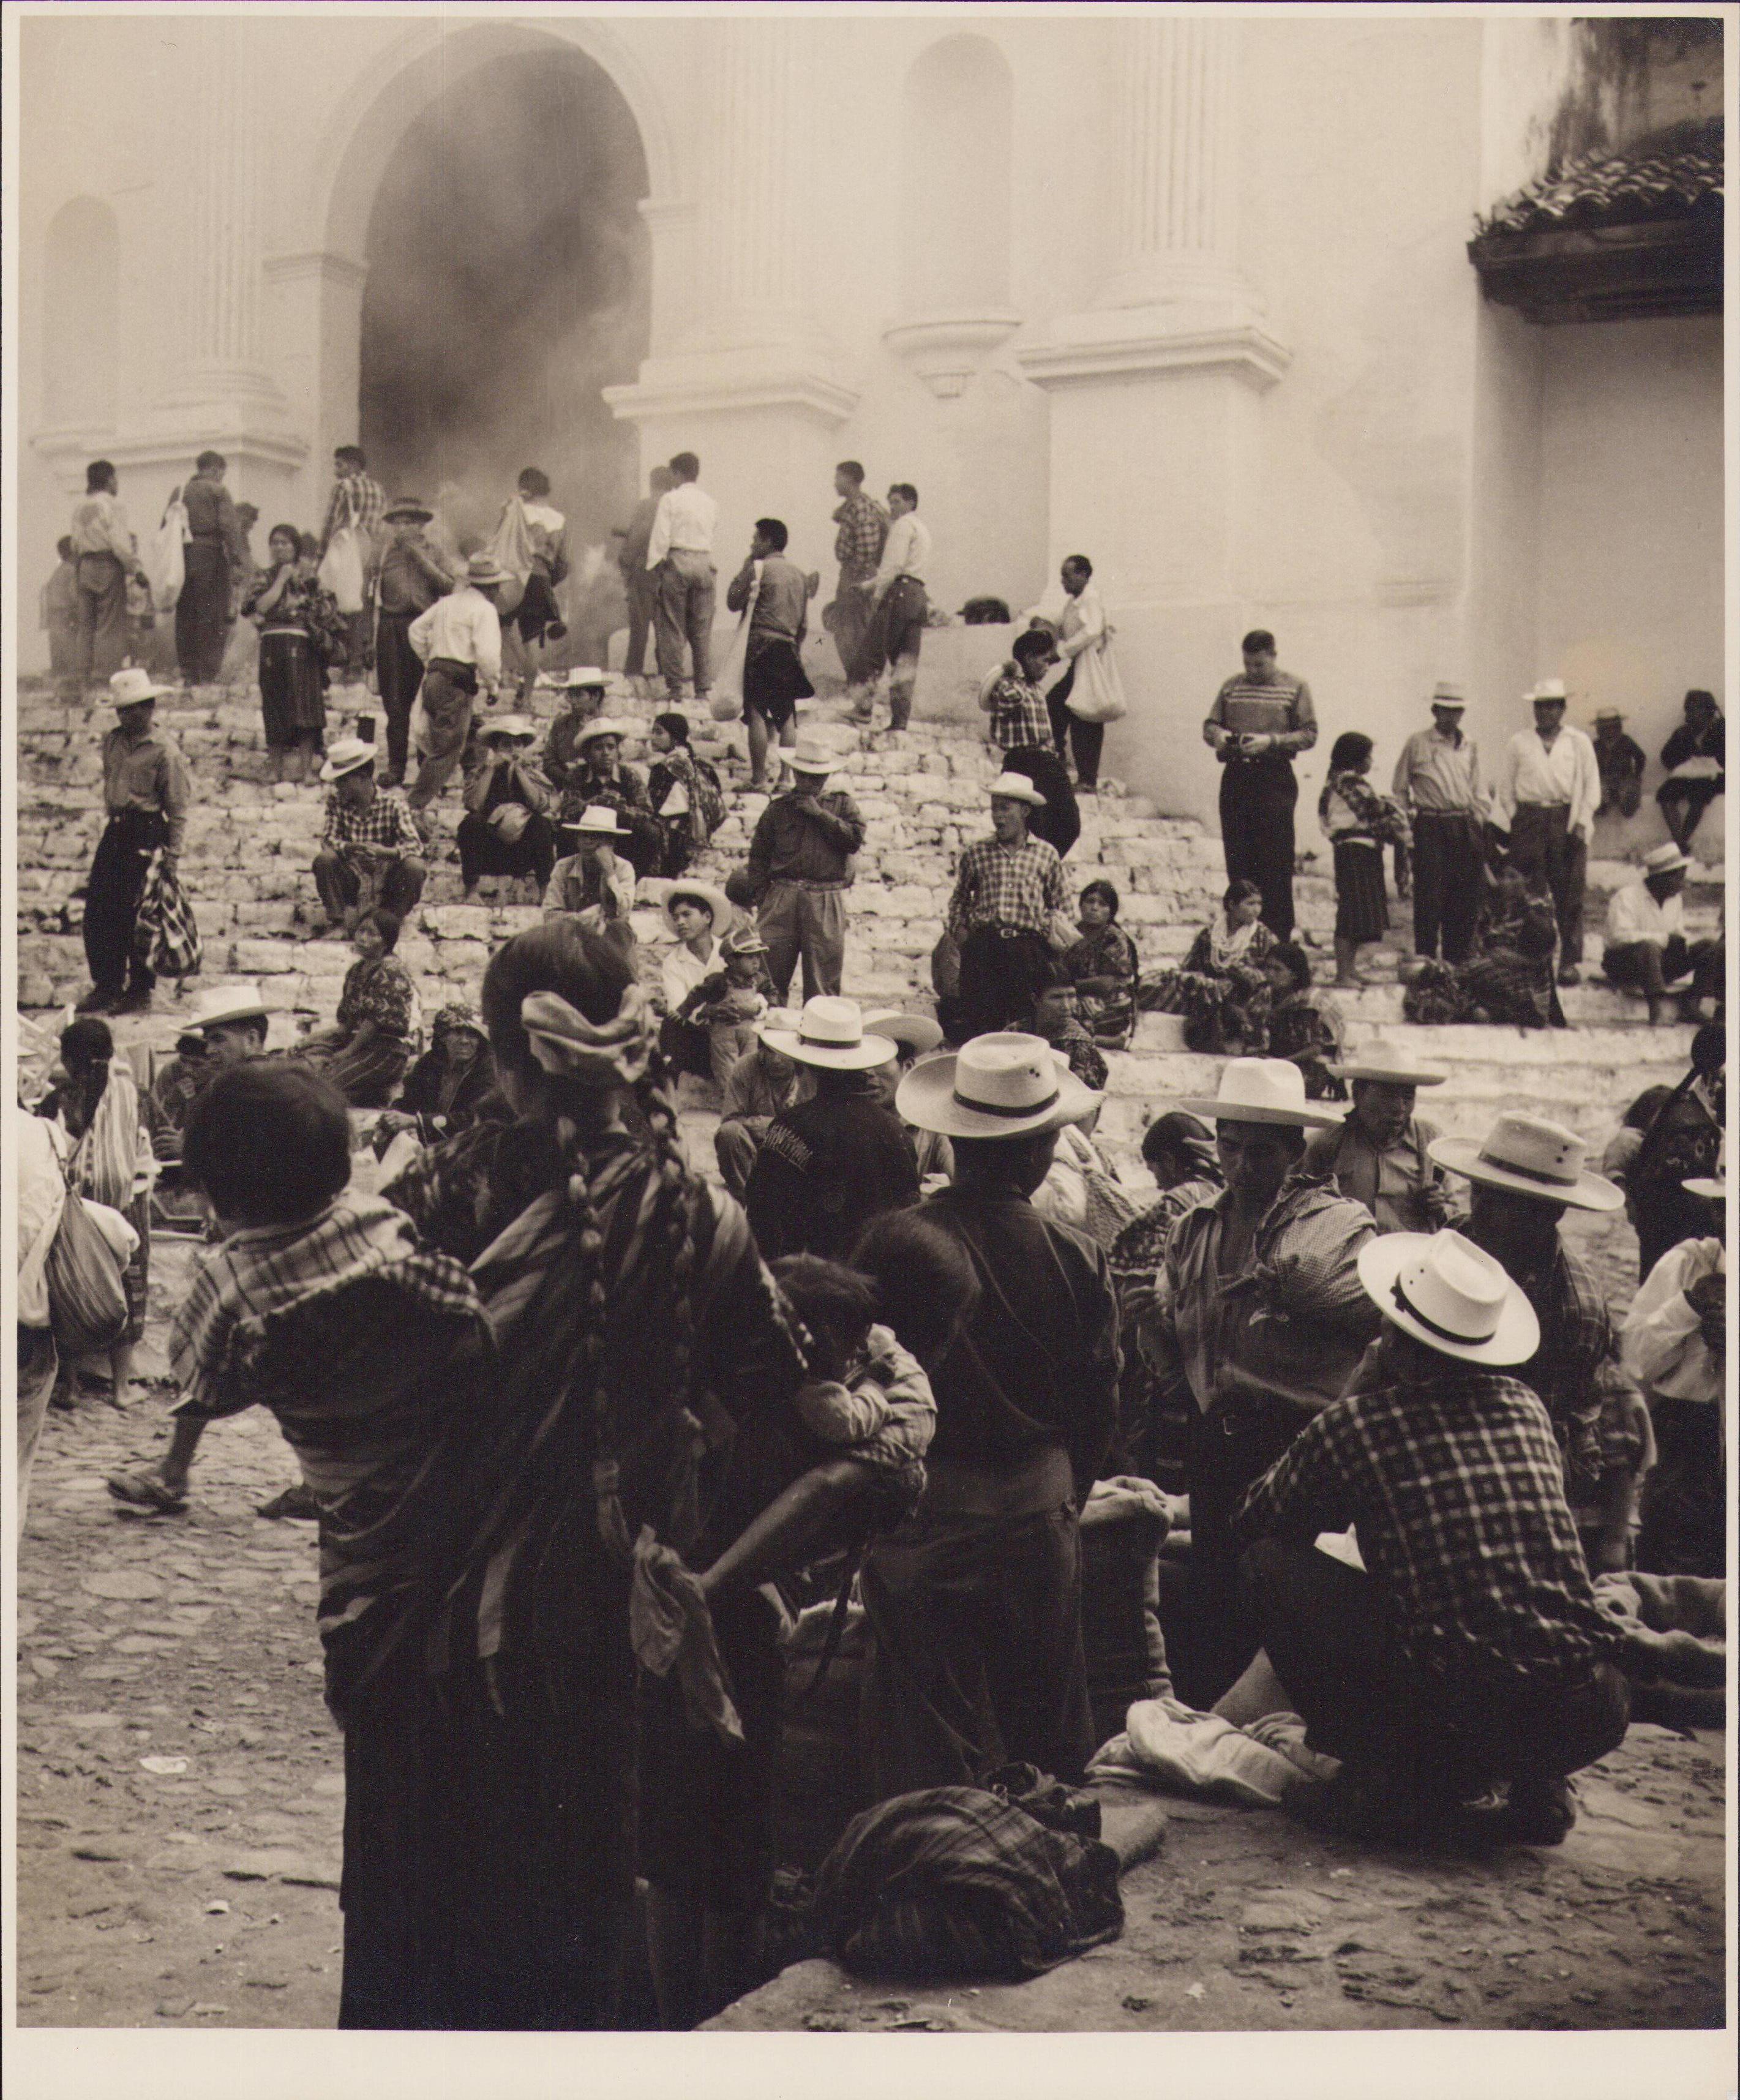 Hanna Seidel Portrait Photograph - Guatemala, Street, People Black and White Photography, ca. 1960s, 29 x 24 cm